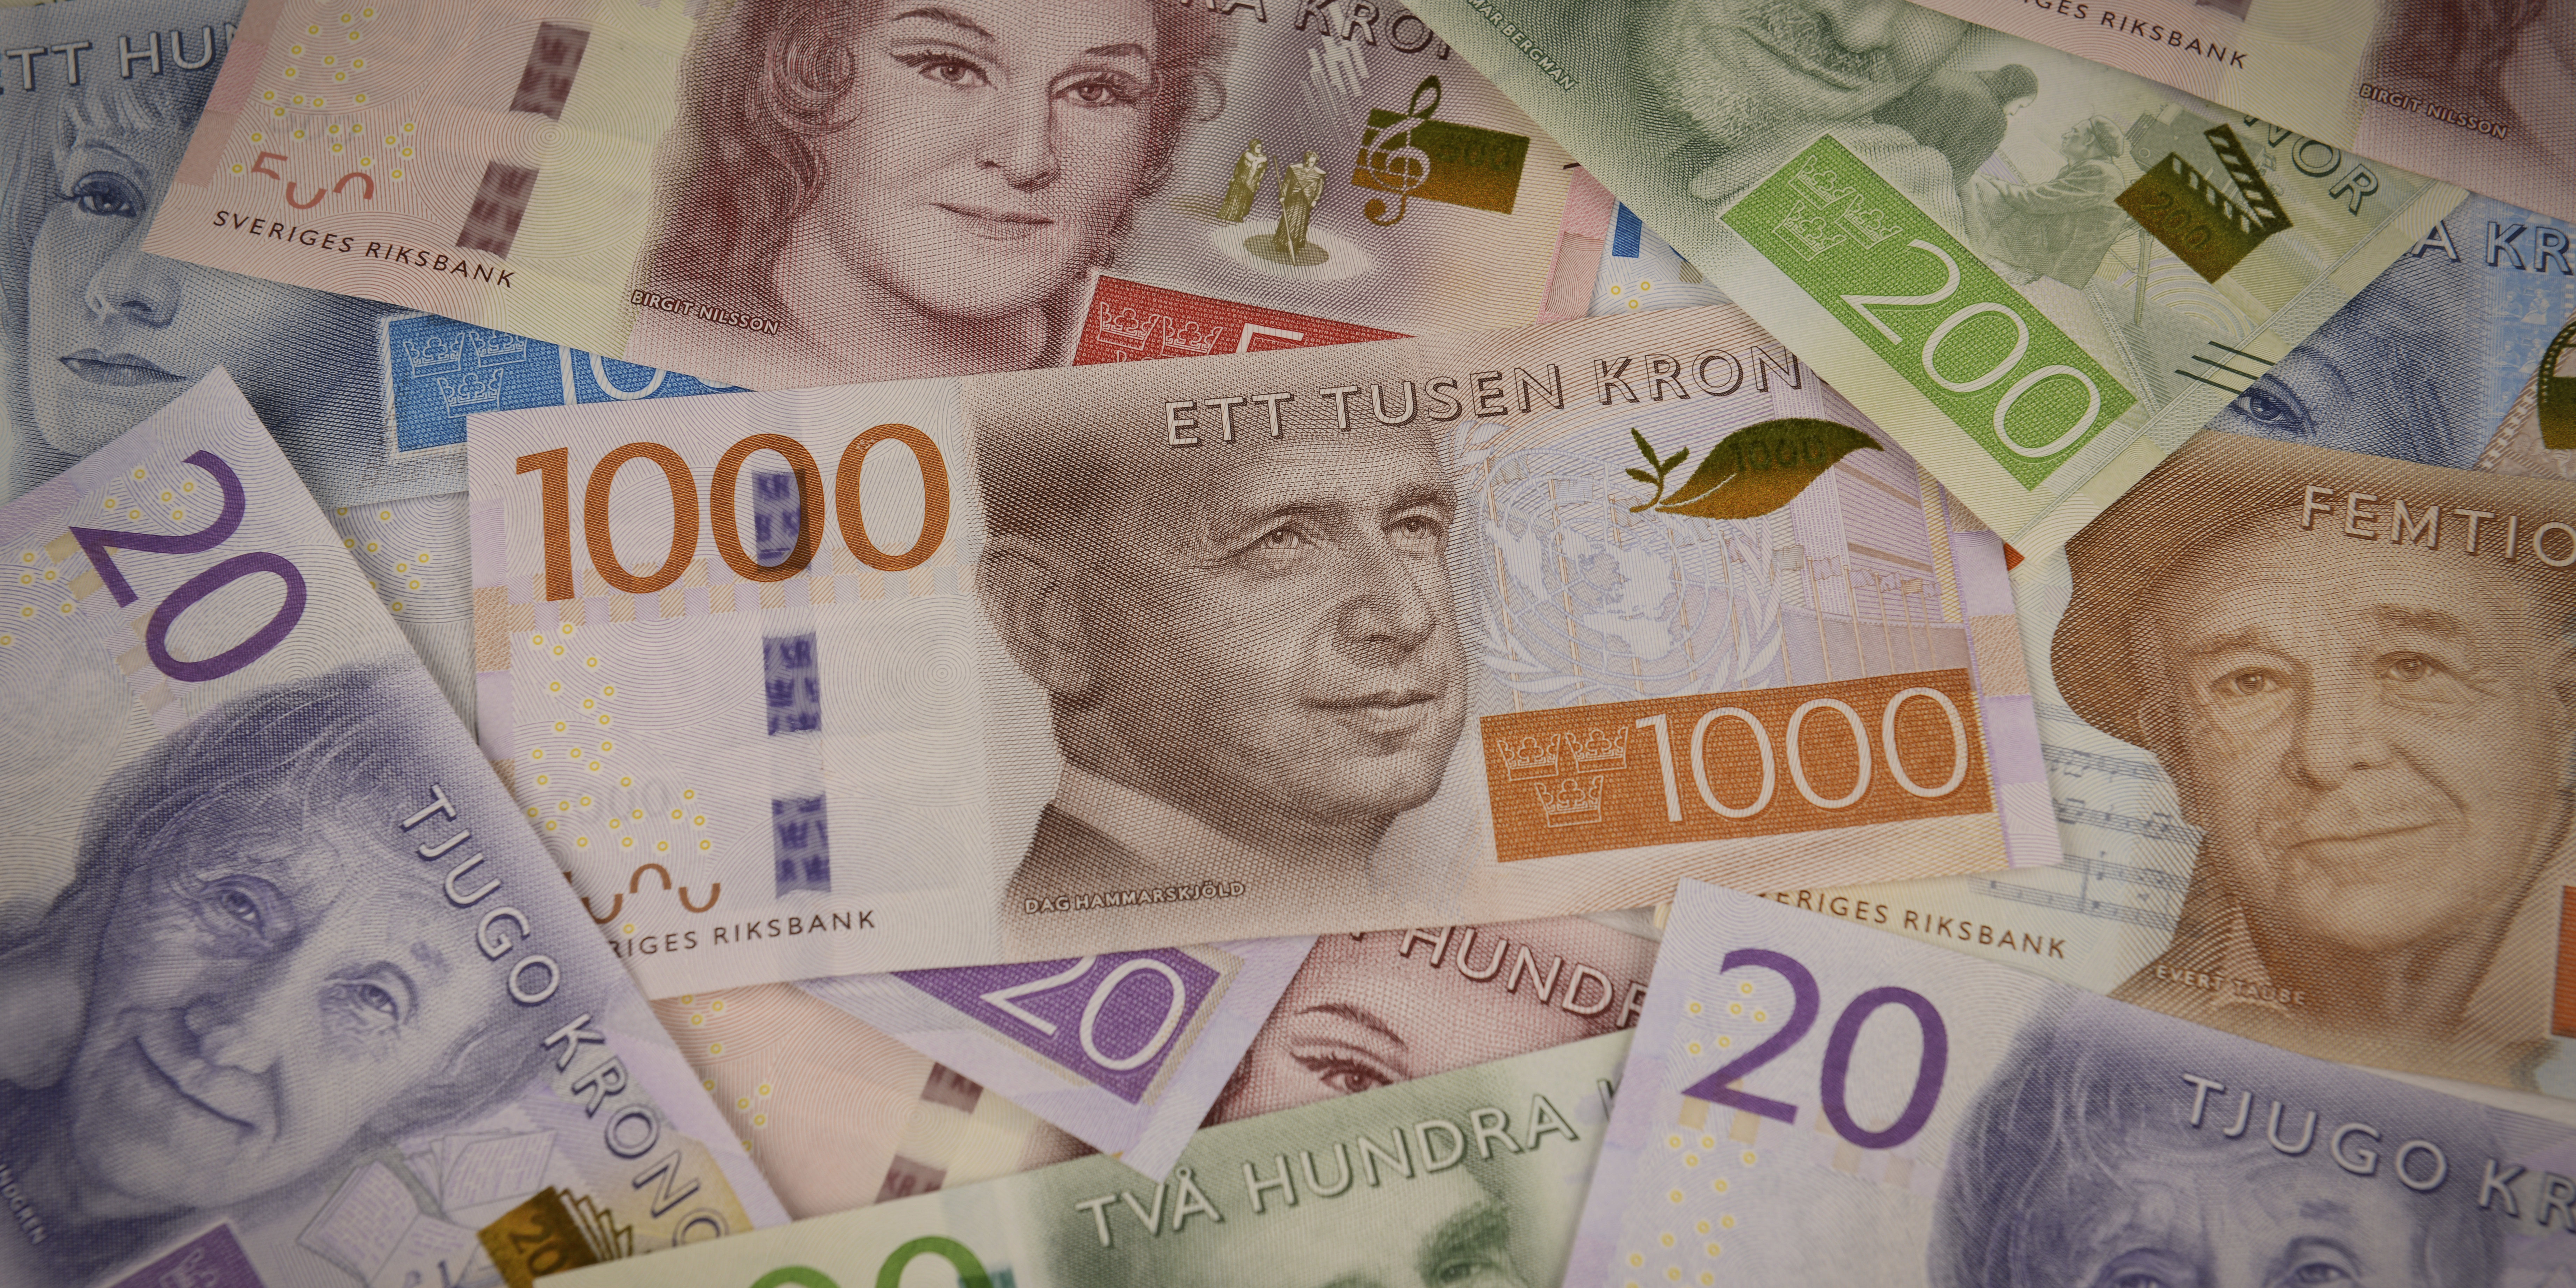 Currency call. Шведская крона. Шведские купюры. Шведские кроны в евро. Банкноты Швеции.